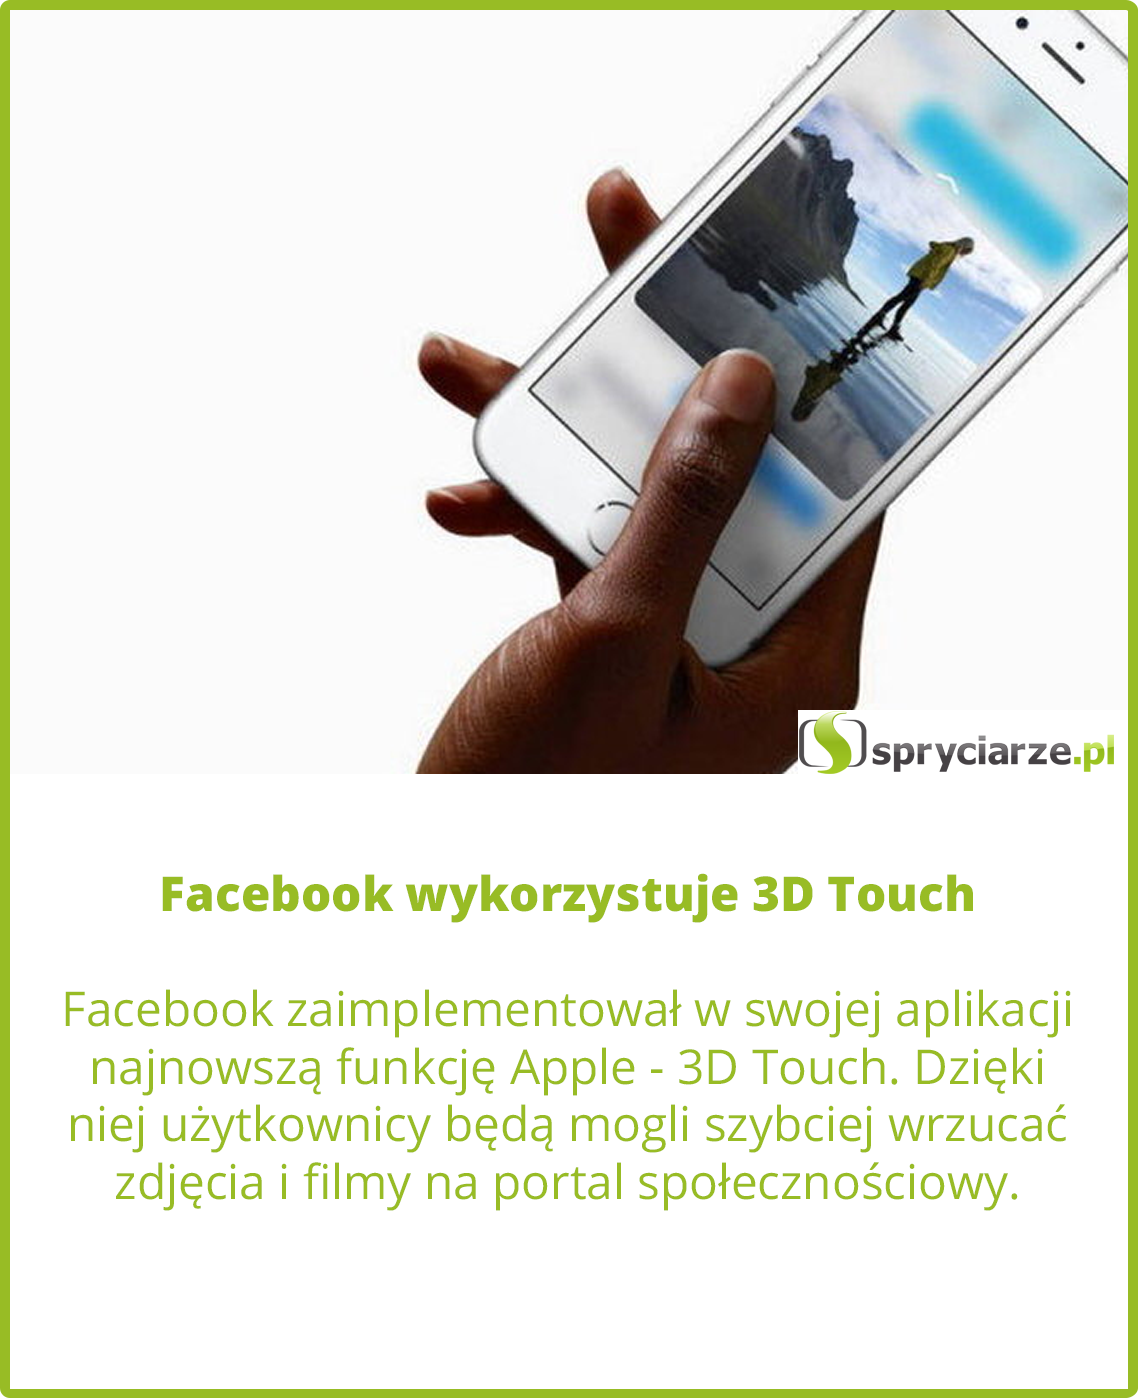 Facebook wykorzystuje 3D Touch